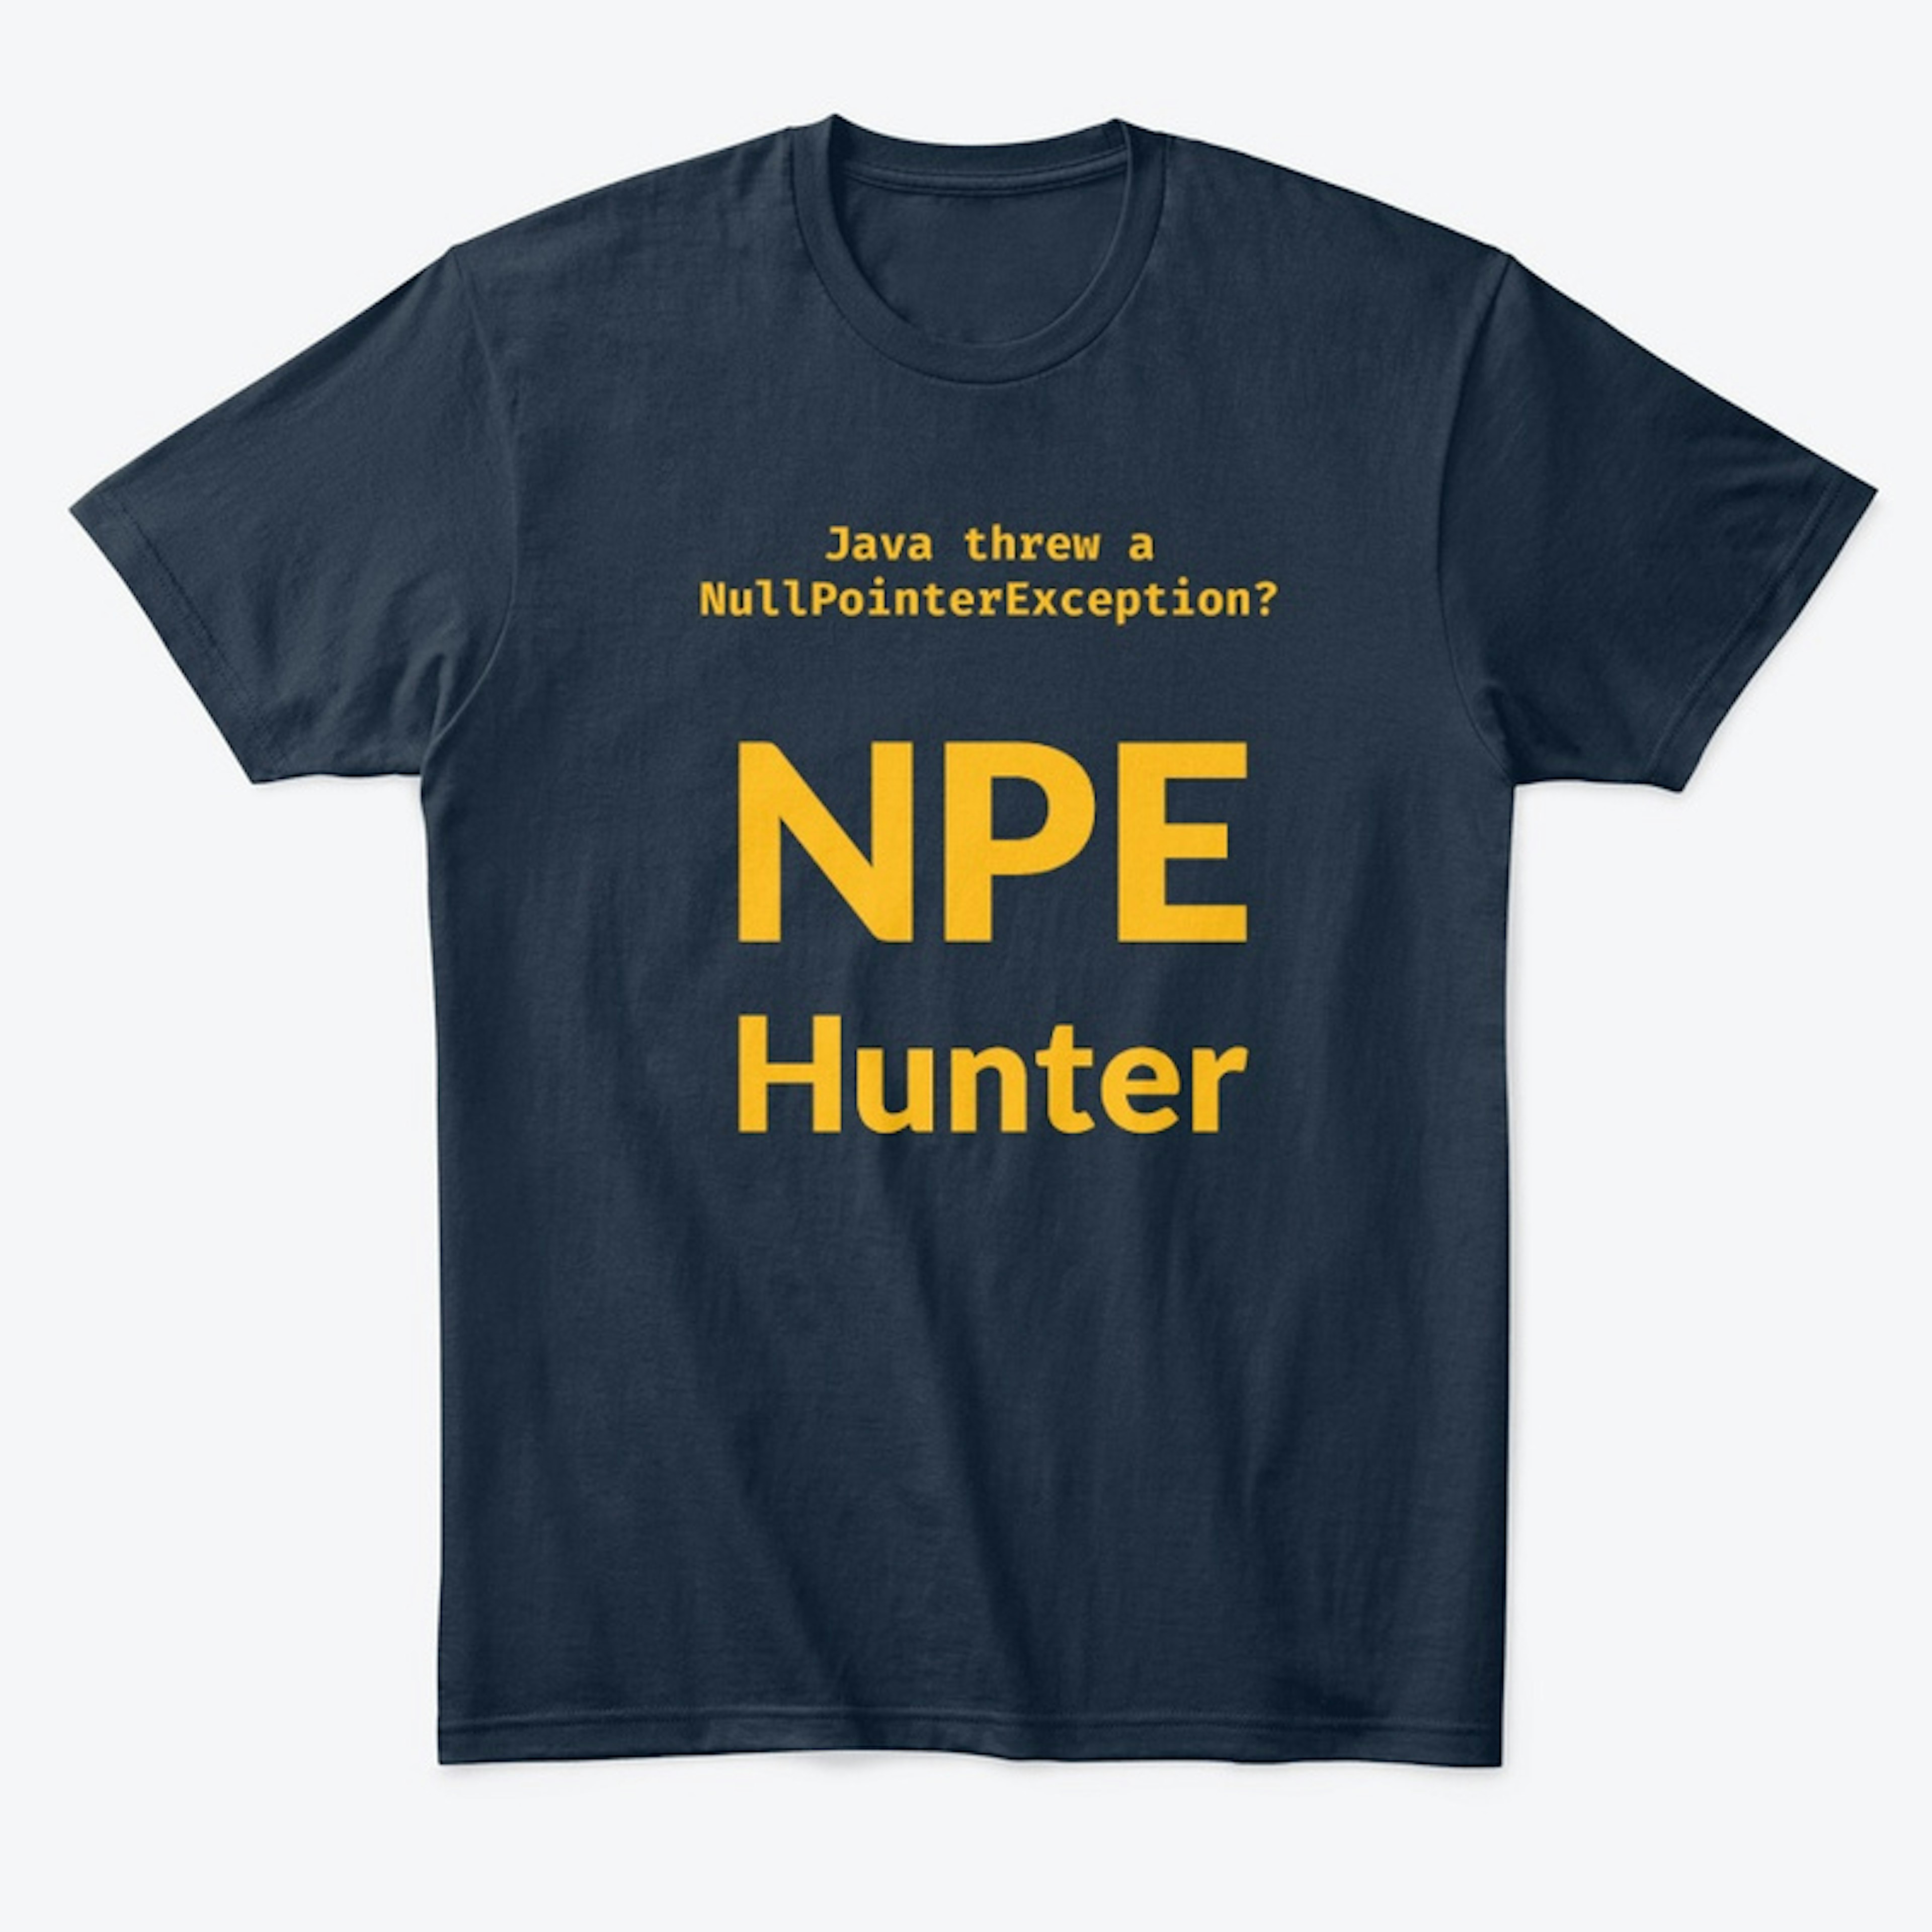 NPE Hunter